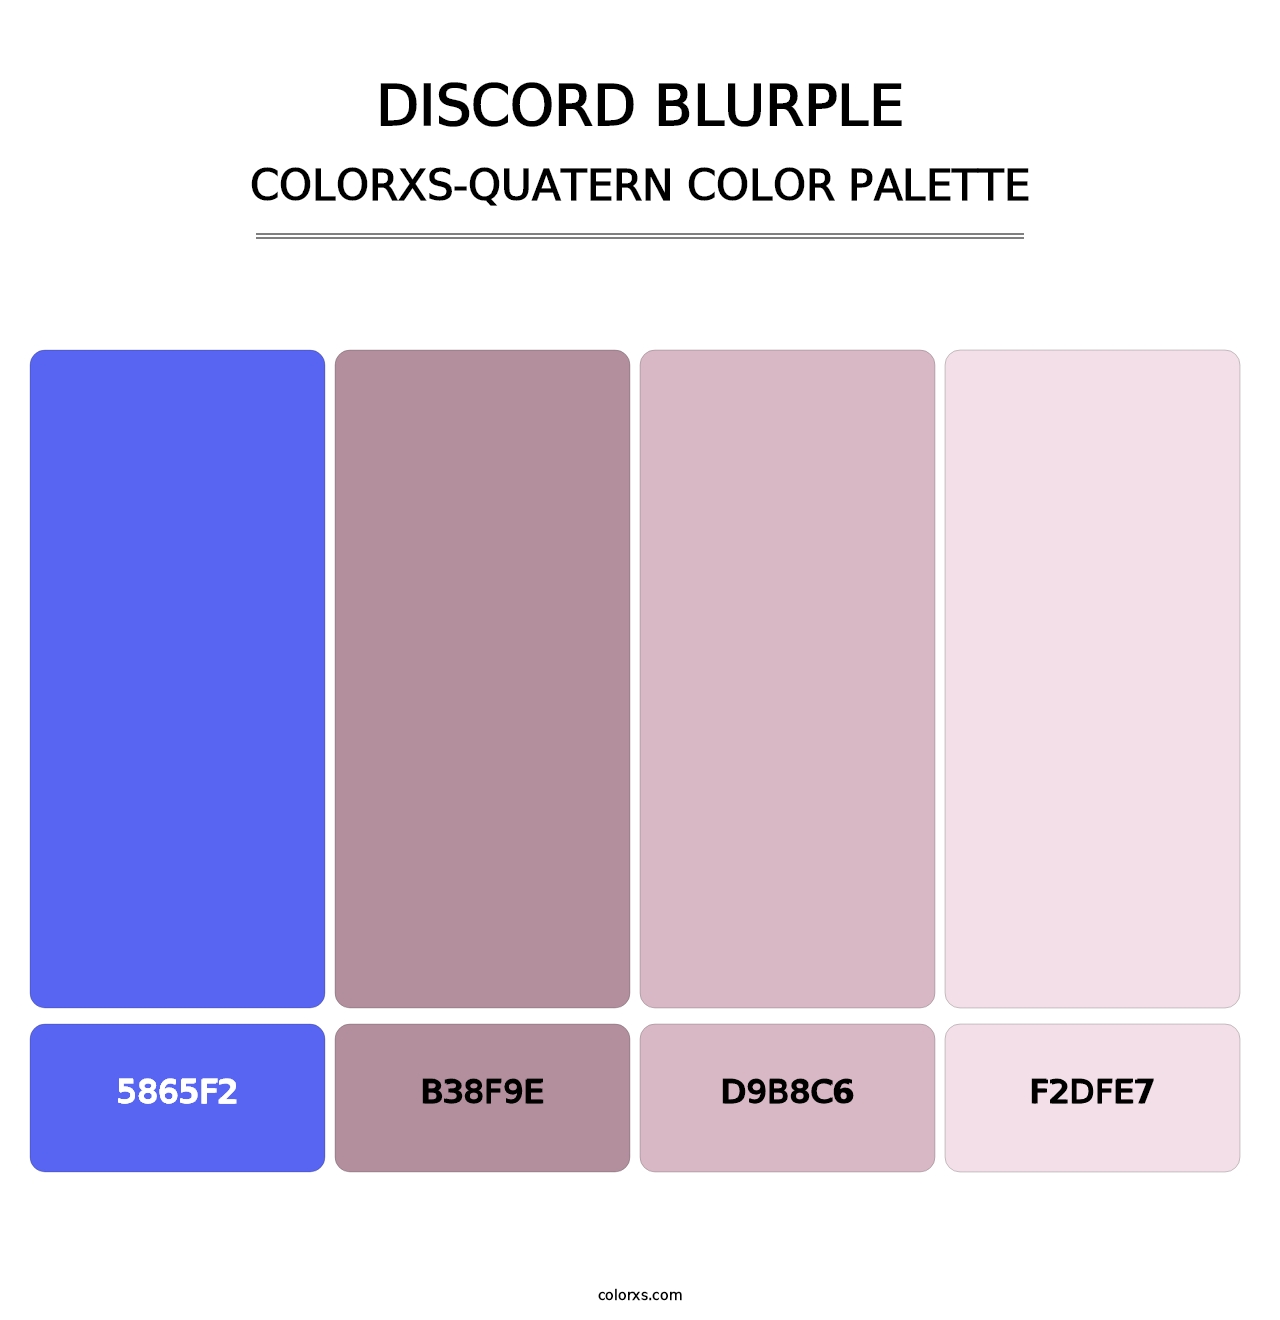 Discord Blurple - Colorxs Quatern Palette